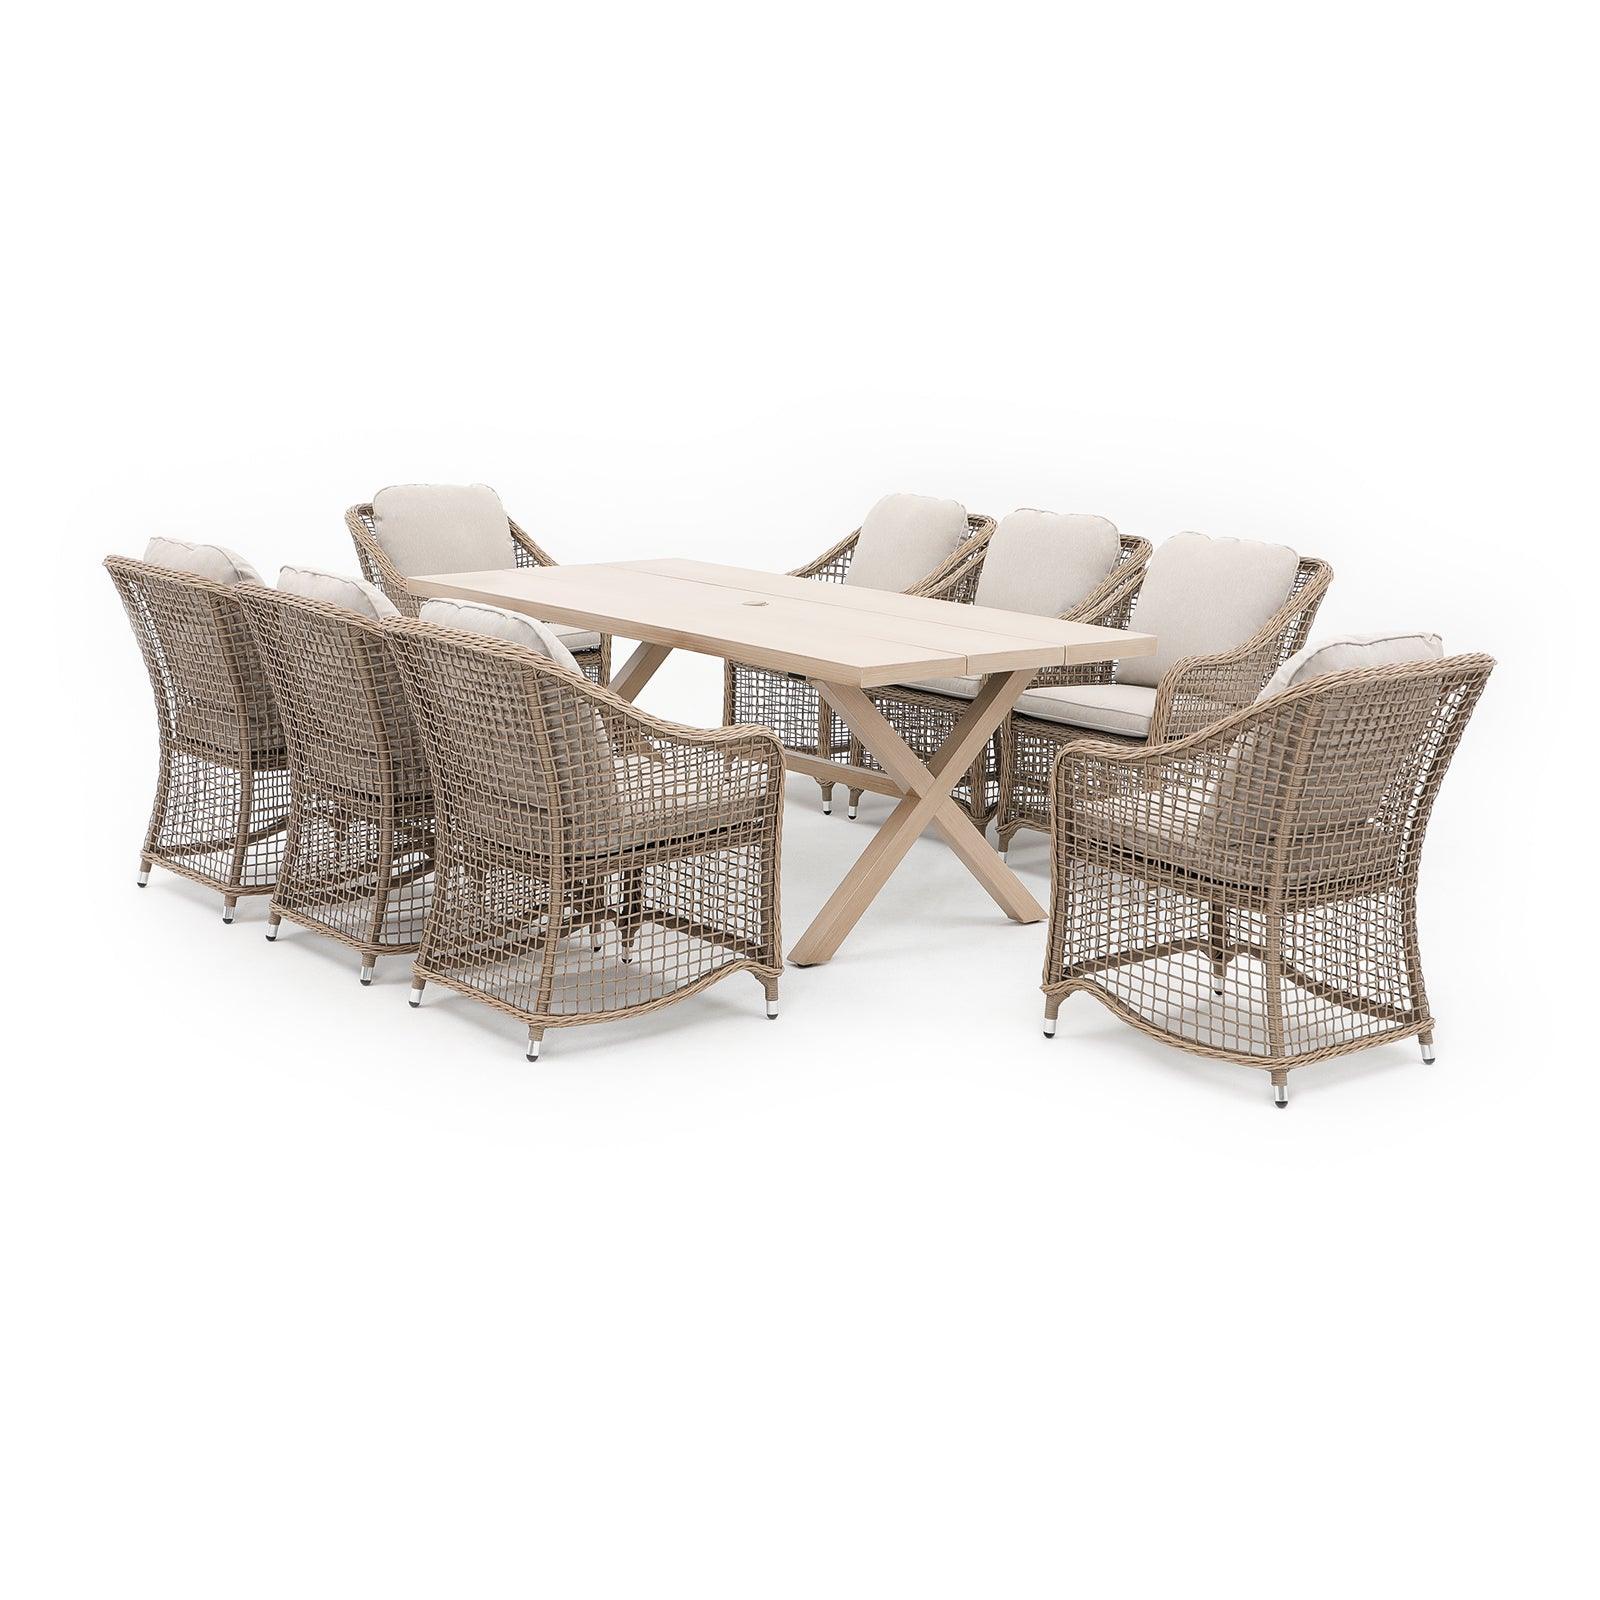 Irati Modern Wicker Outdoor Furniture, 9 piece aluminum frame outdoor dining set with umbrella hole -Jardina Furniture